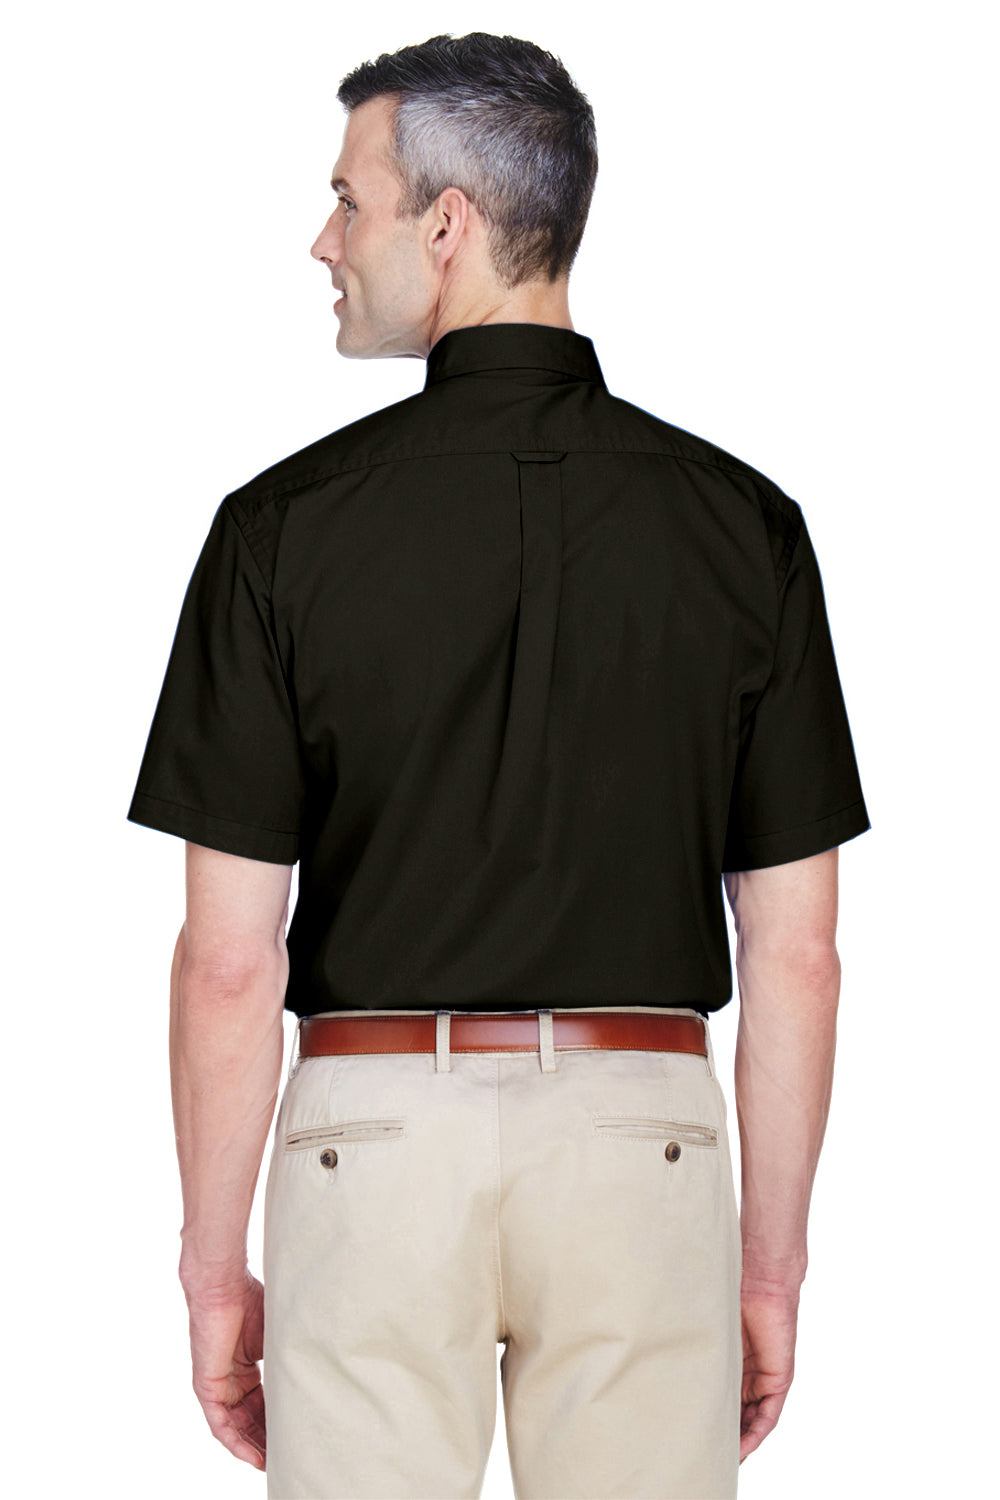 Harriton M500S Mens Wrinkle Resistant Short Sleeve Button Down Shirt w/ Pocket Black Back